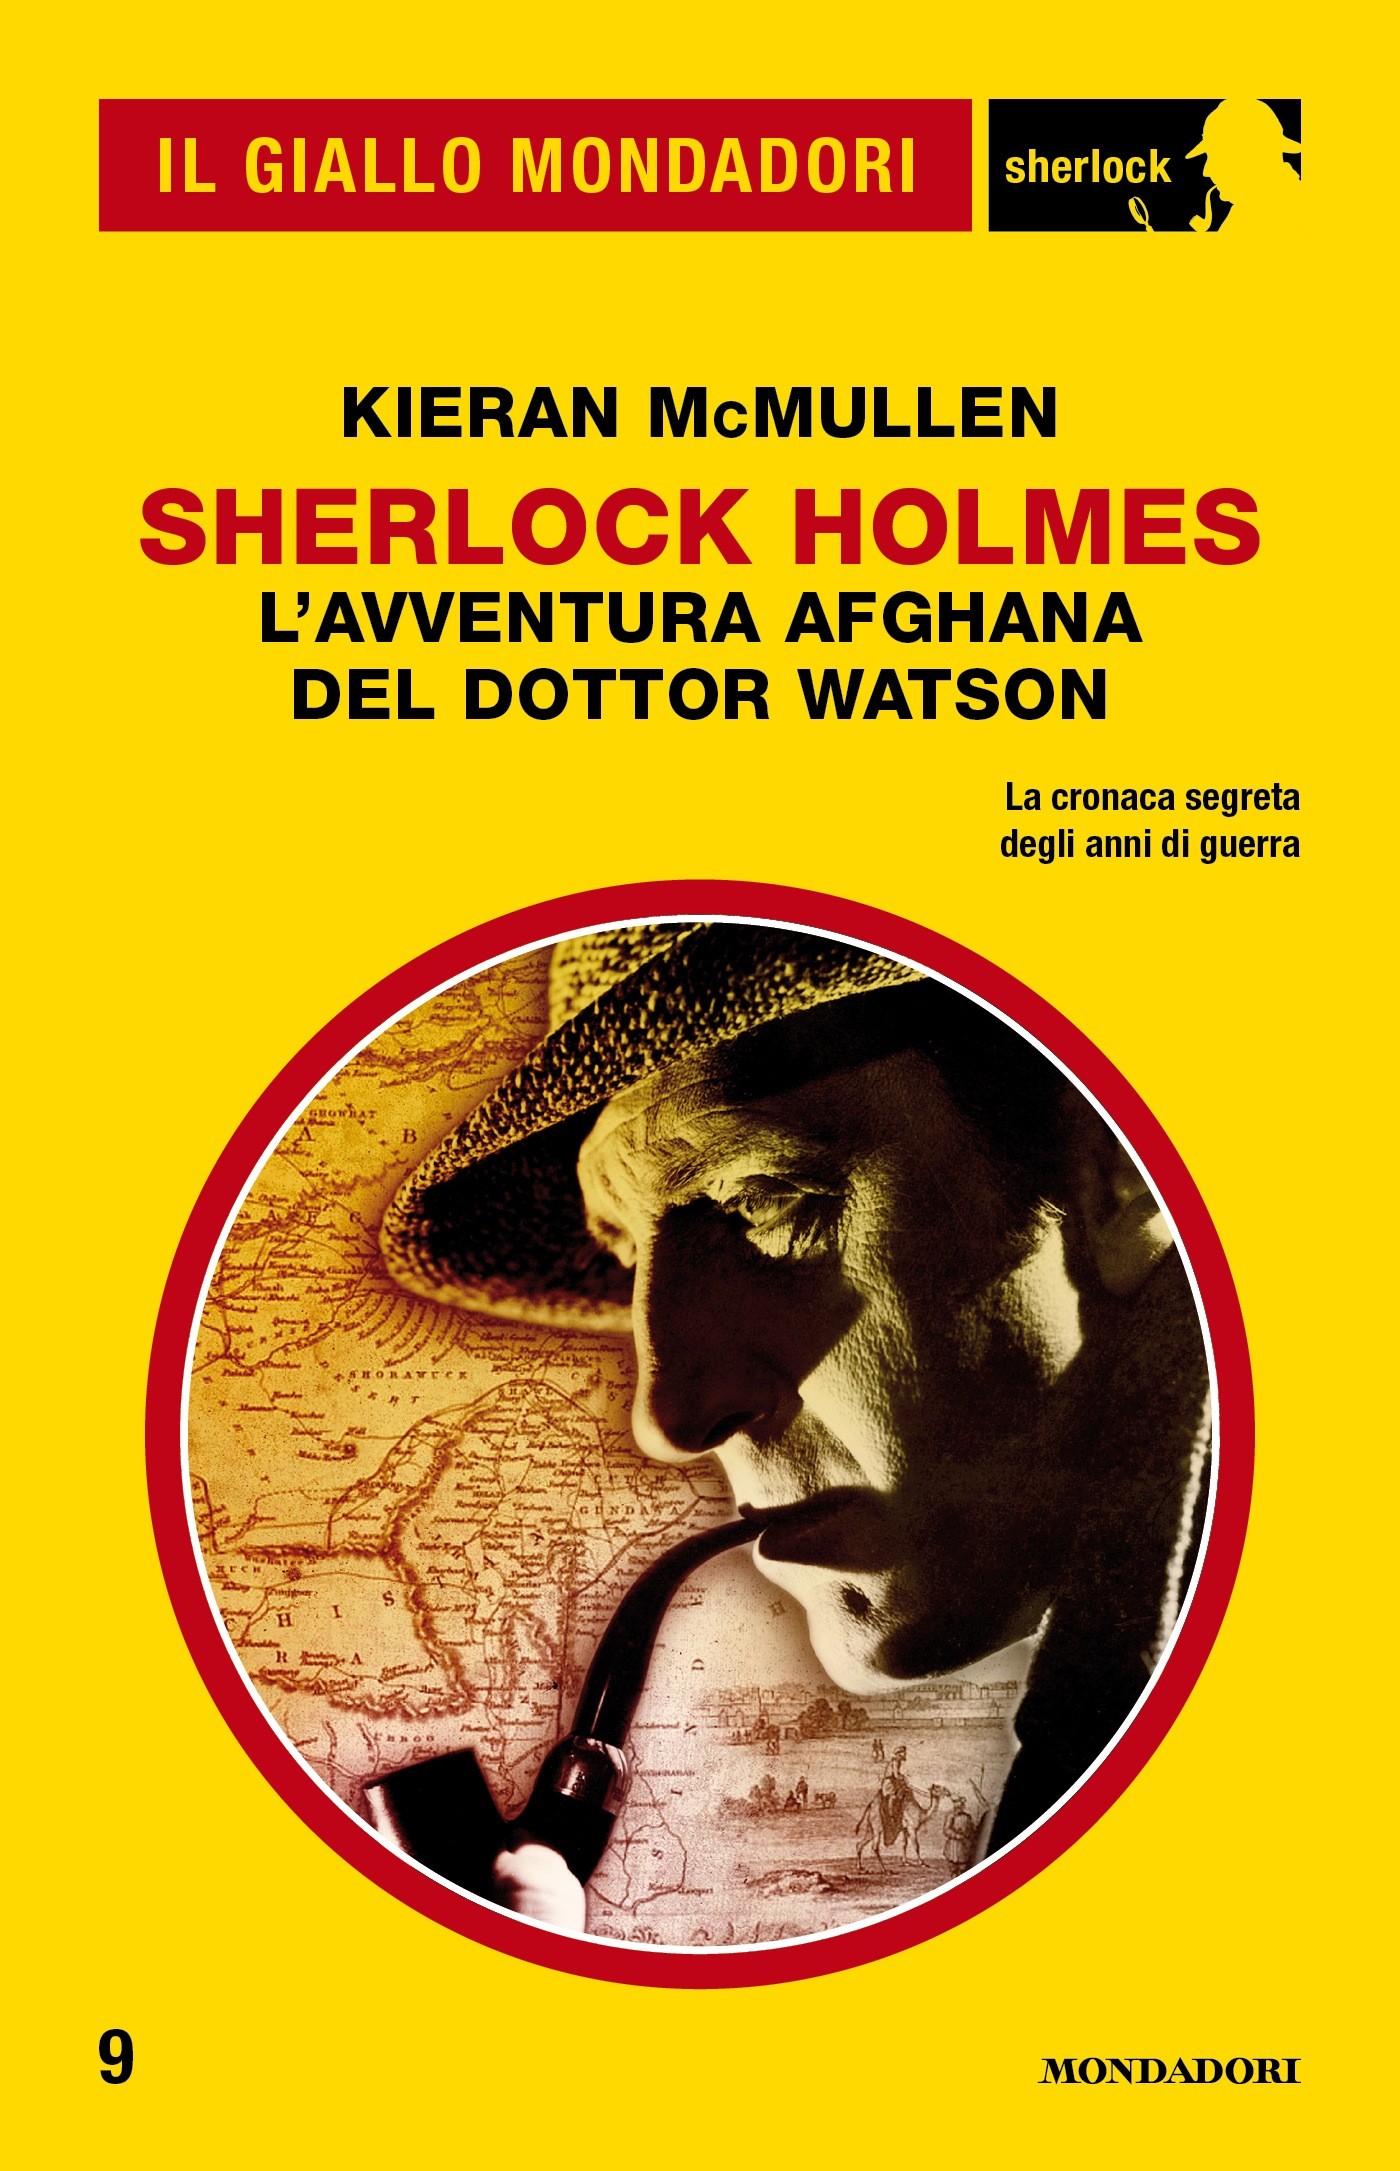 Sherlock Holmes - L'avventura afghana del dottor Watson (Il Giallo Mondadori Sherlock) - Librerie.coop